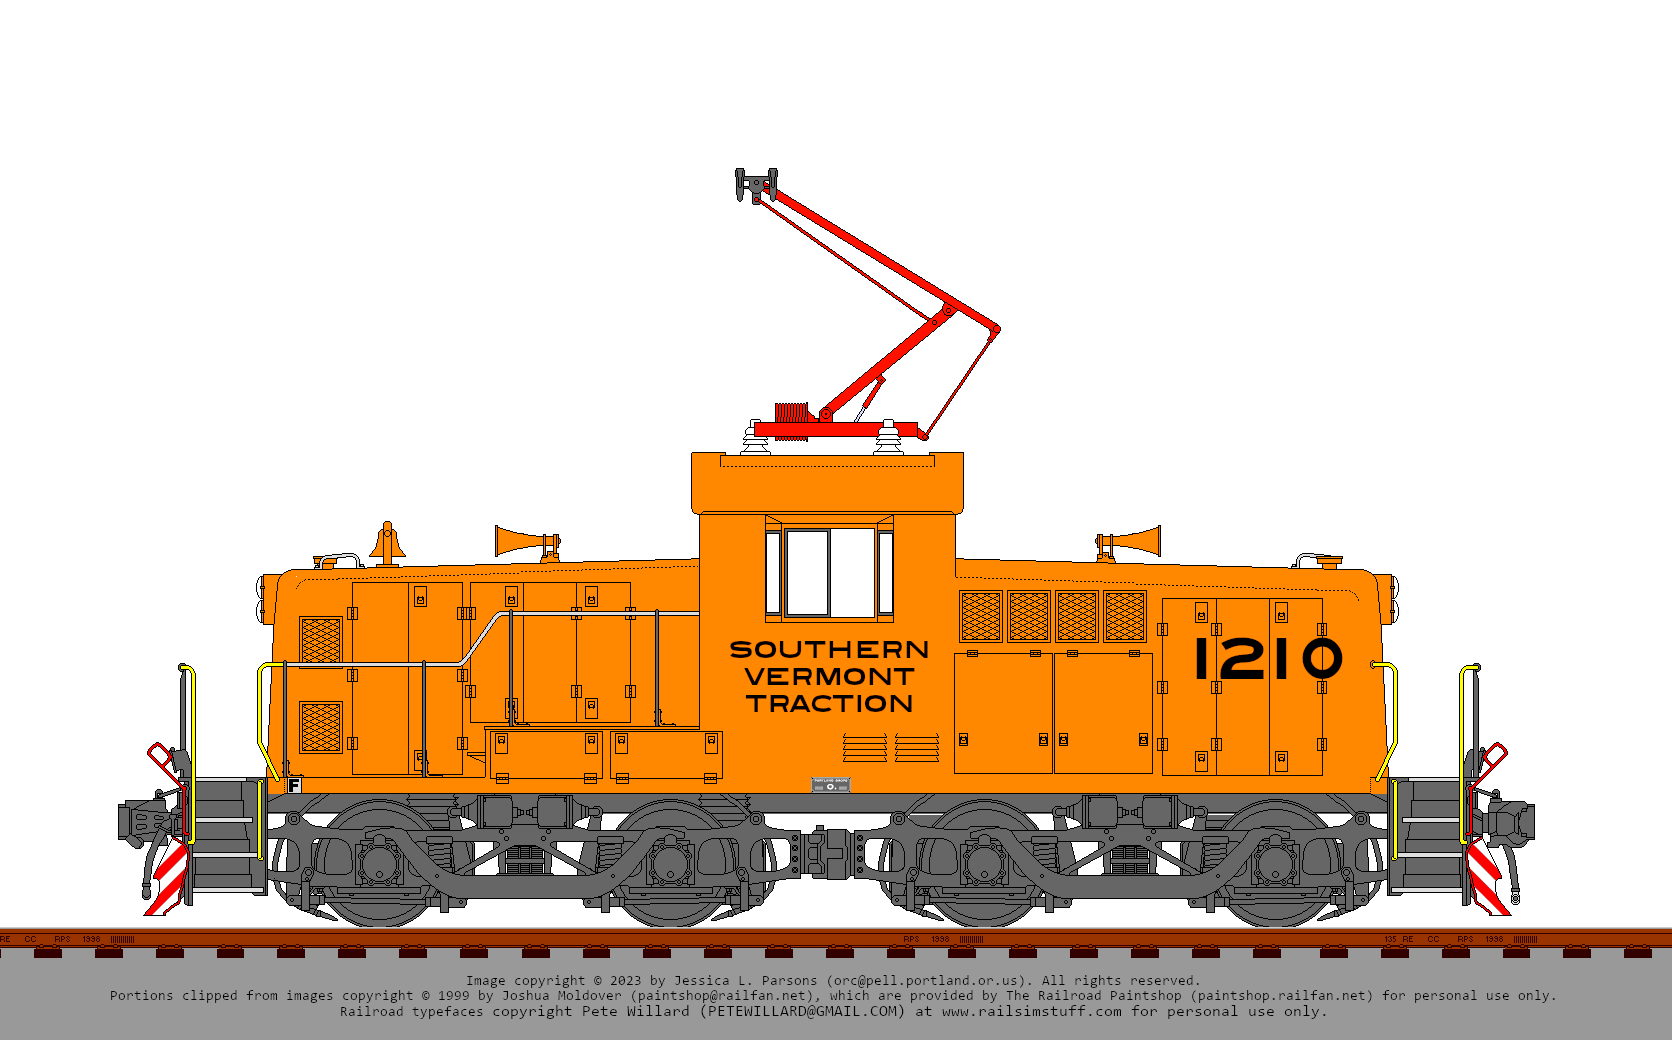 SLR #1210 in classic traction orange